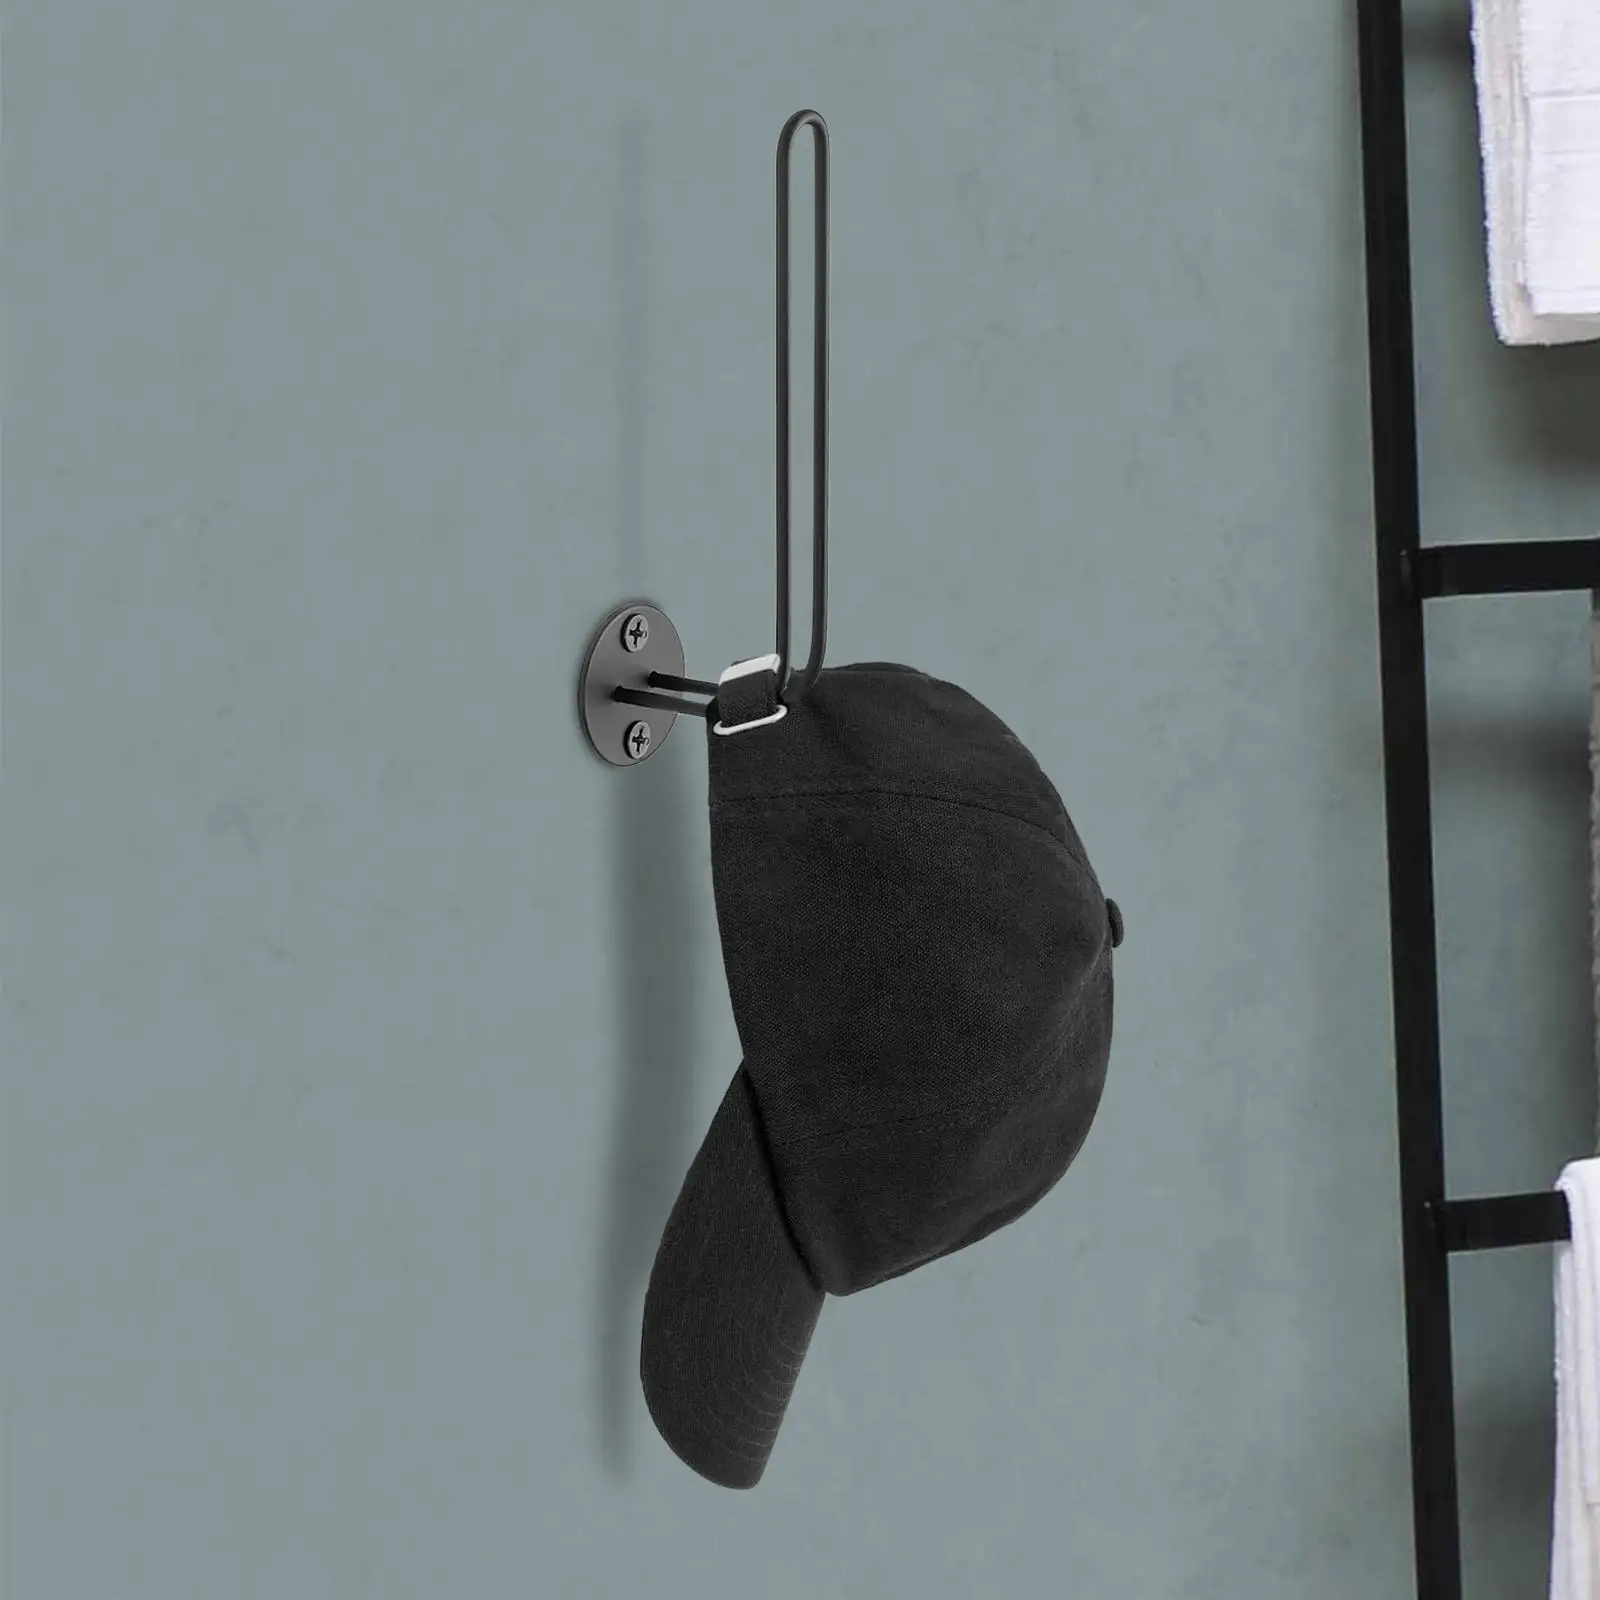 Baseball Cap Organizer Metal Wall Mounted Hook Black Easy Installation Modern for Closet Living Room Office Home Wall Decor